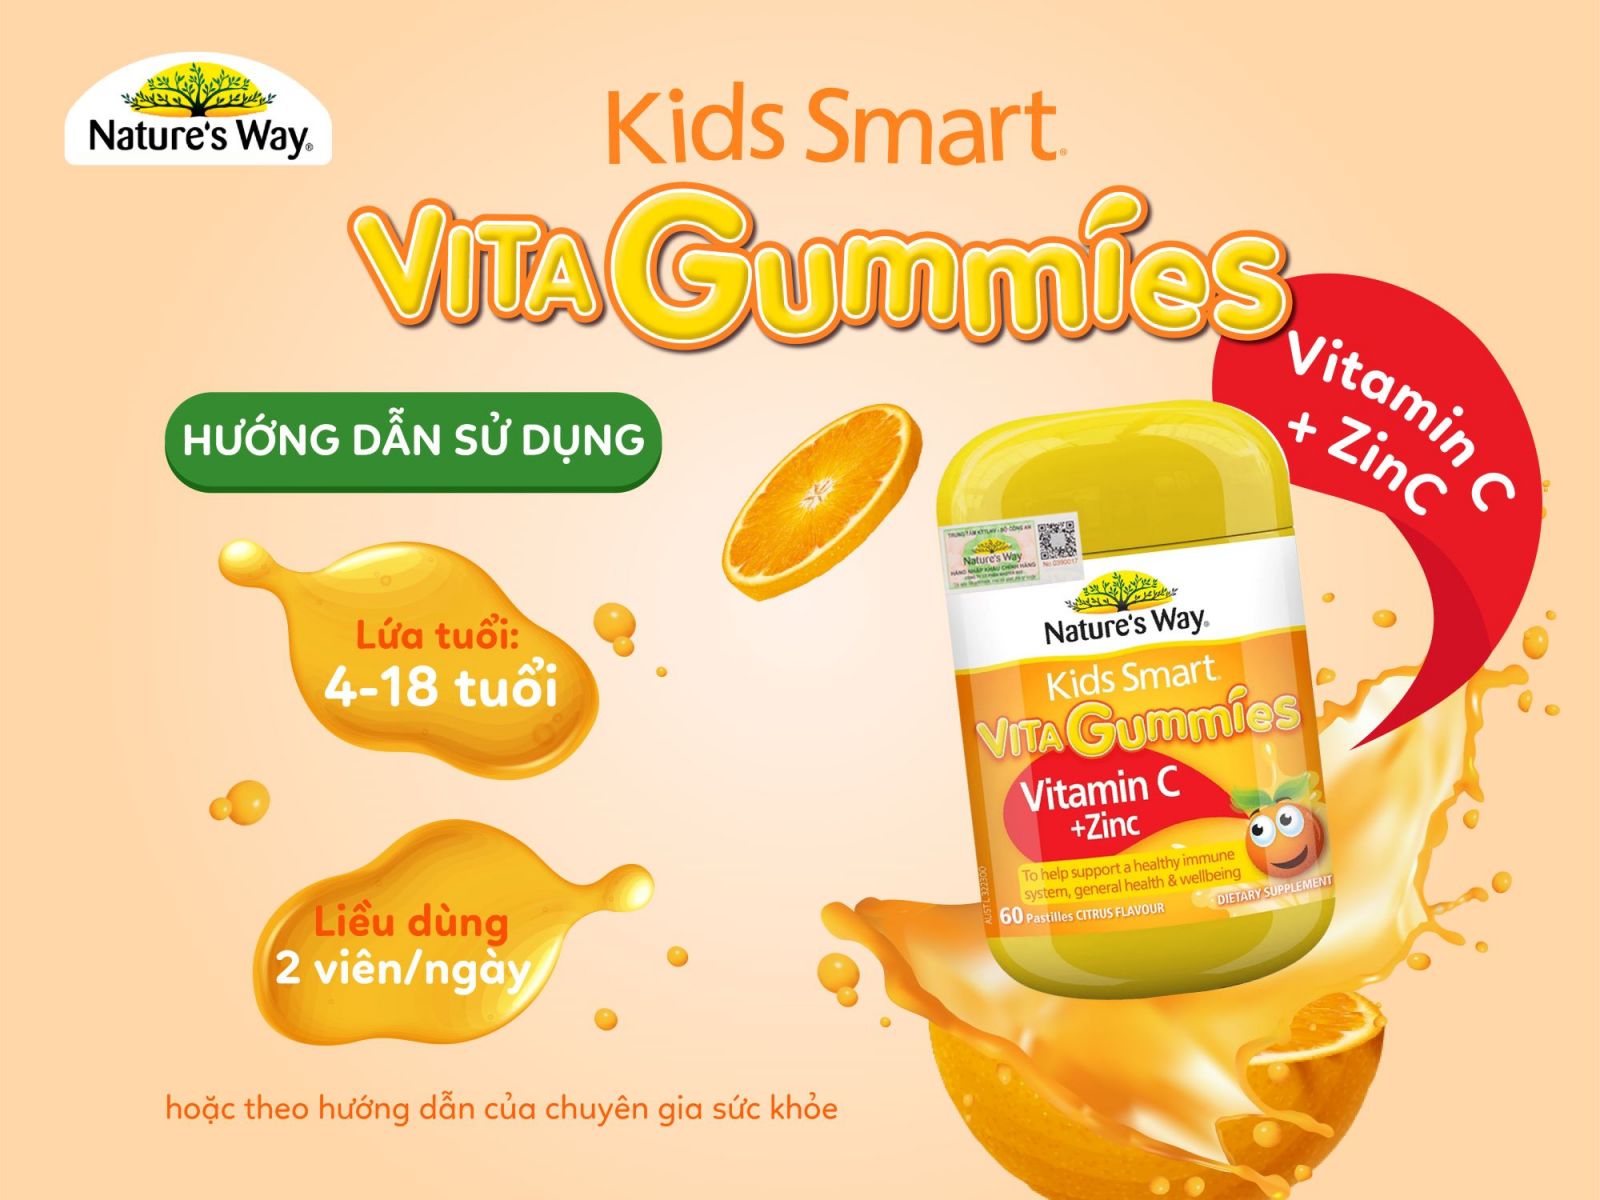 Nature’s Way Kids Smart Vita Gummies Vitamin C + ZinC